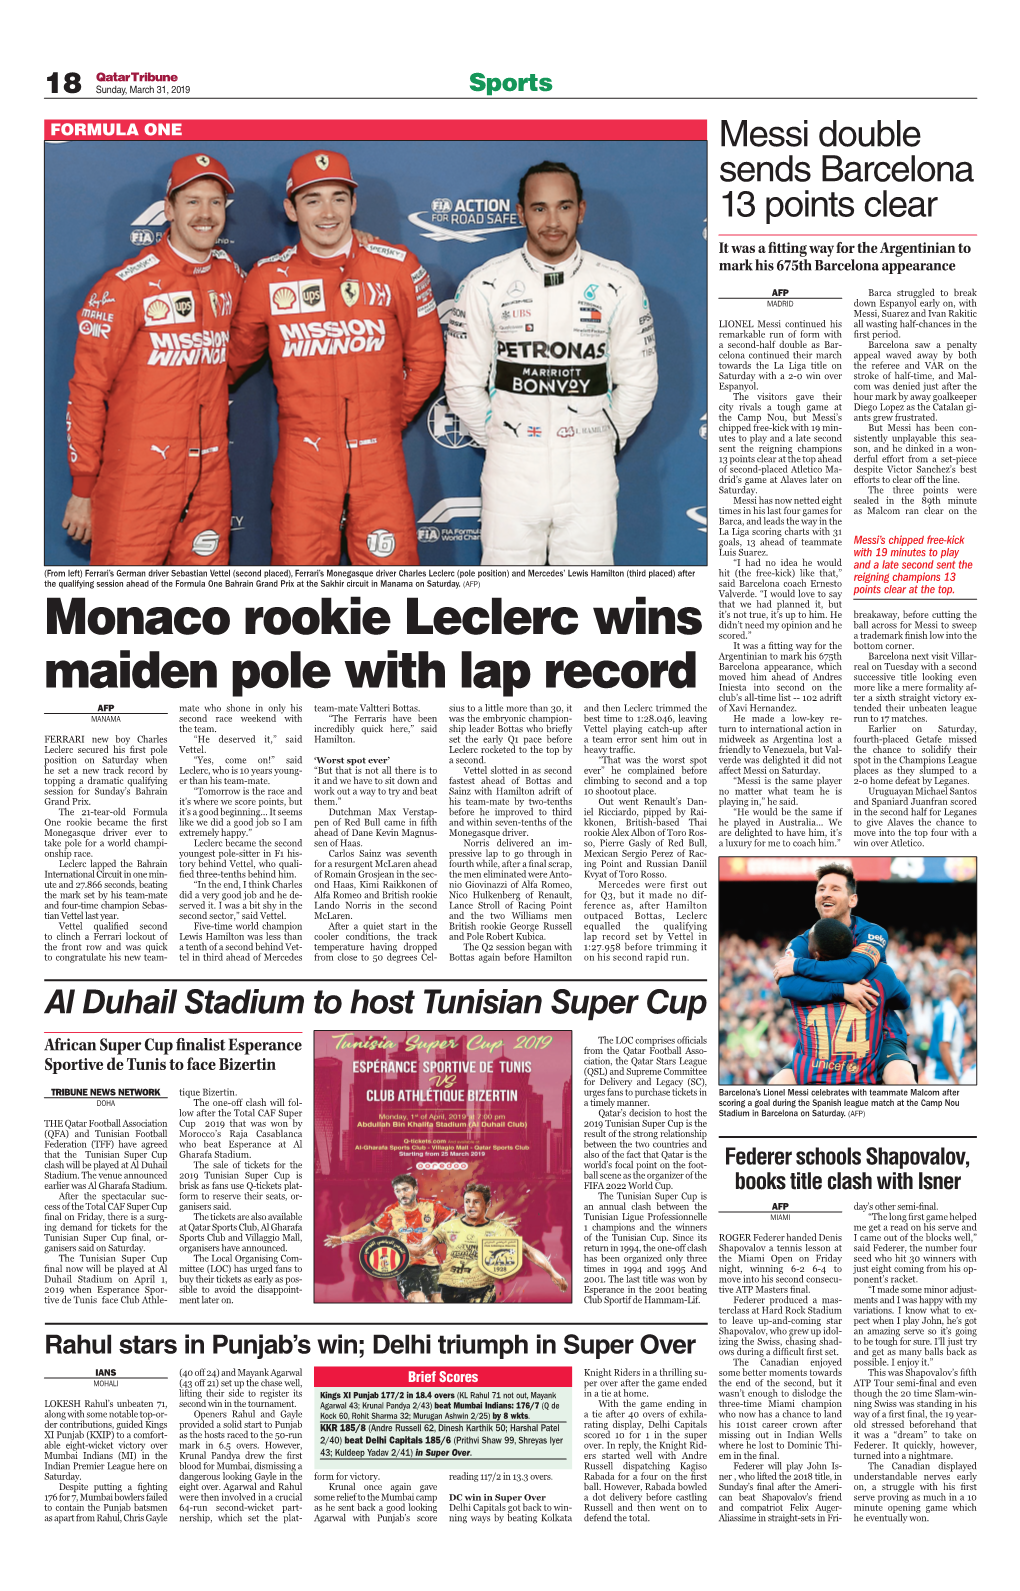 Monaco Rookie Leclerc Wins Maiden Pole with Lap Record